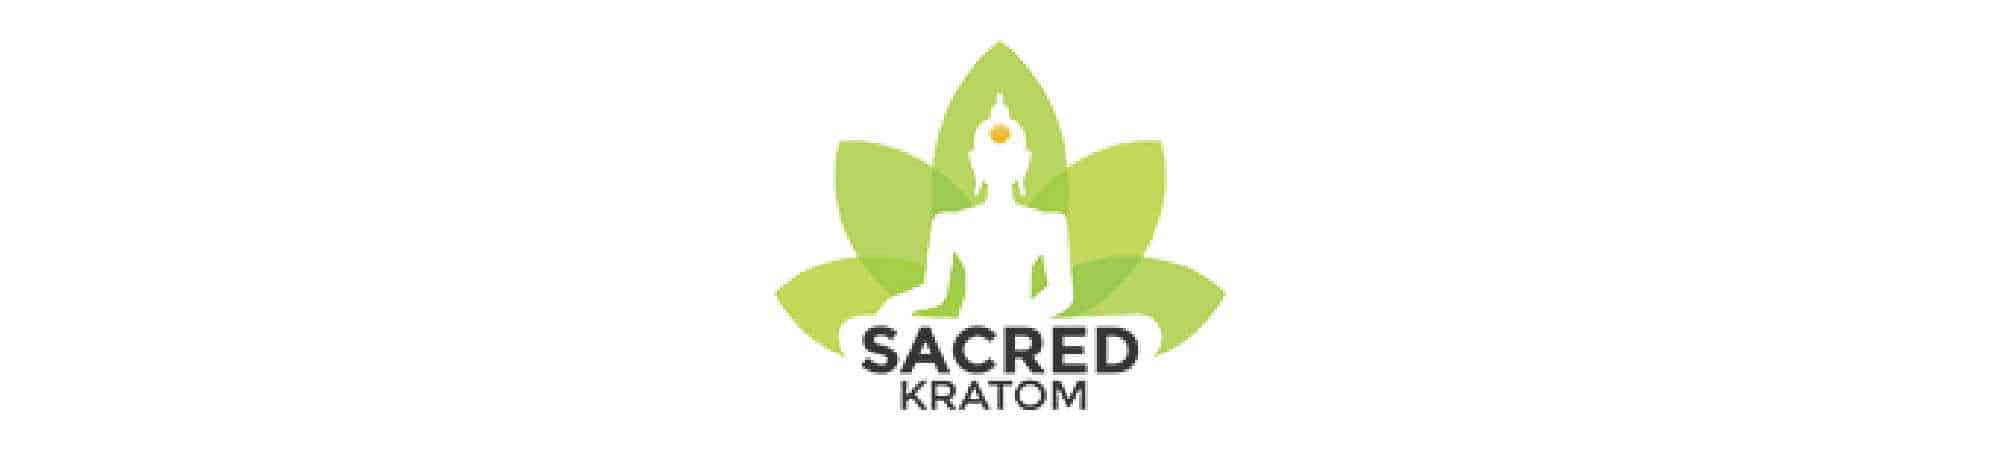 image of sacred kratom